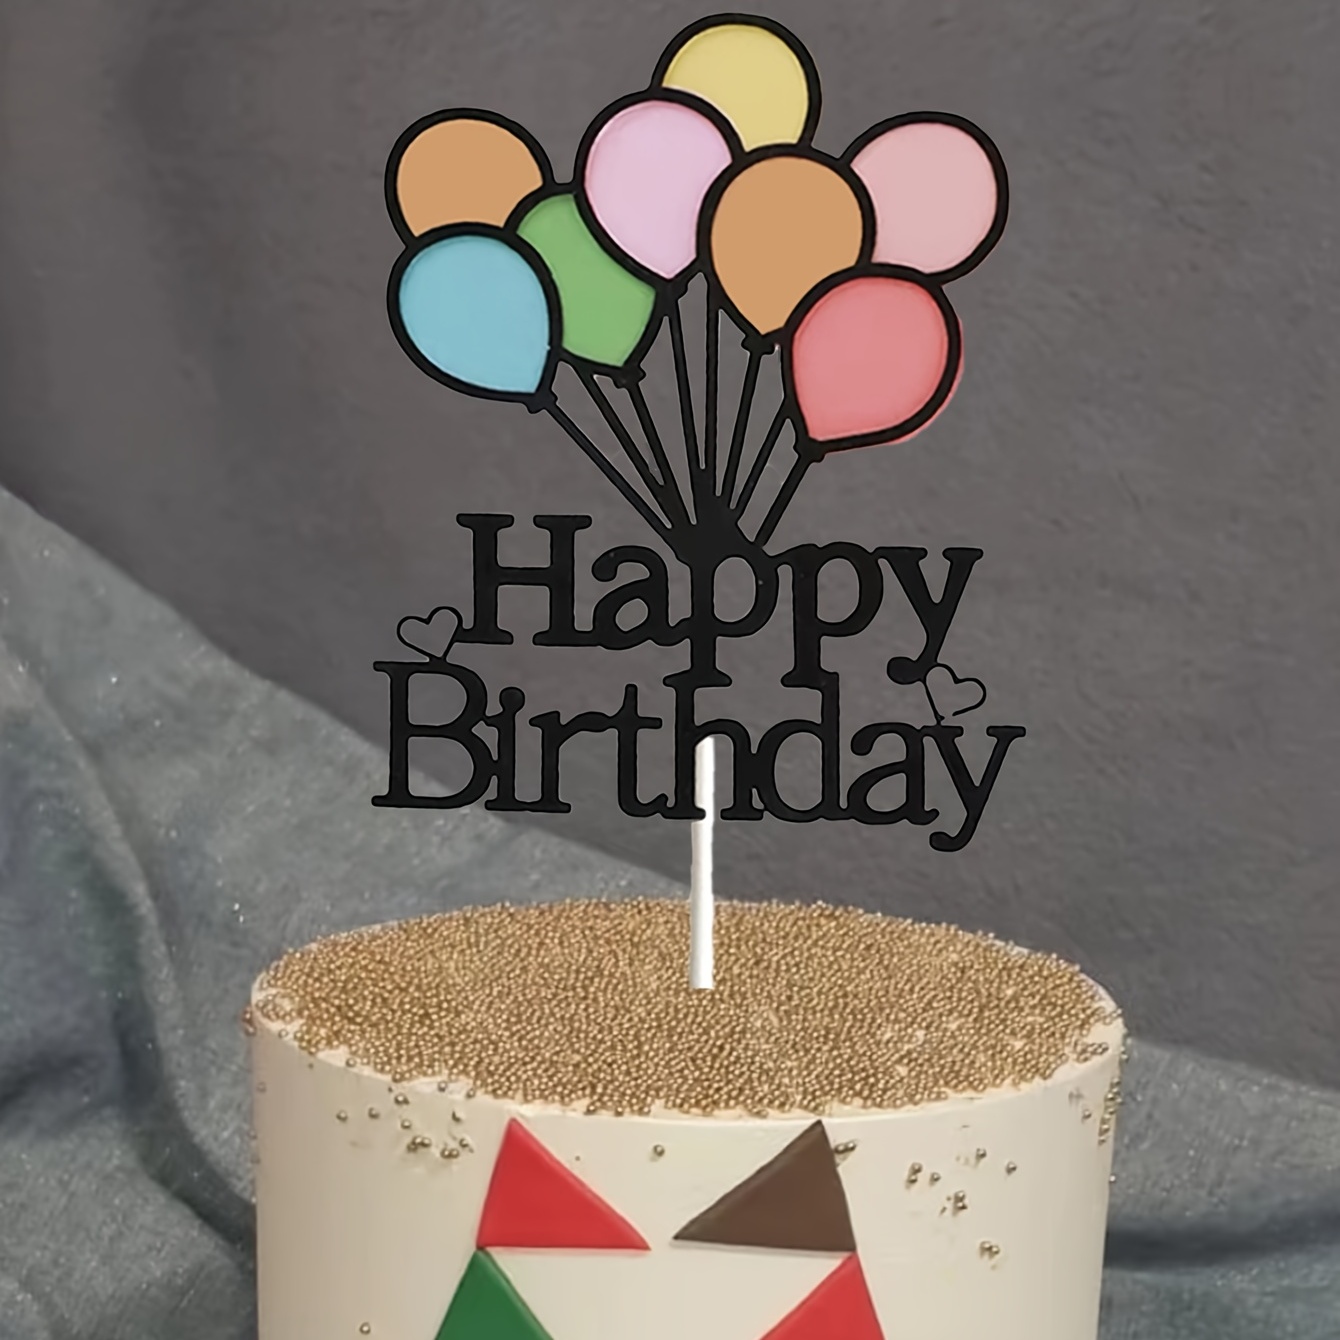 Meri Meri - Rainbow balloon cake topper - Little Zebra